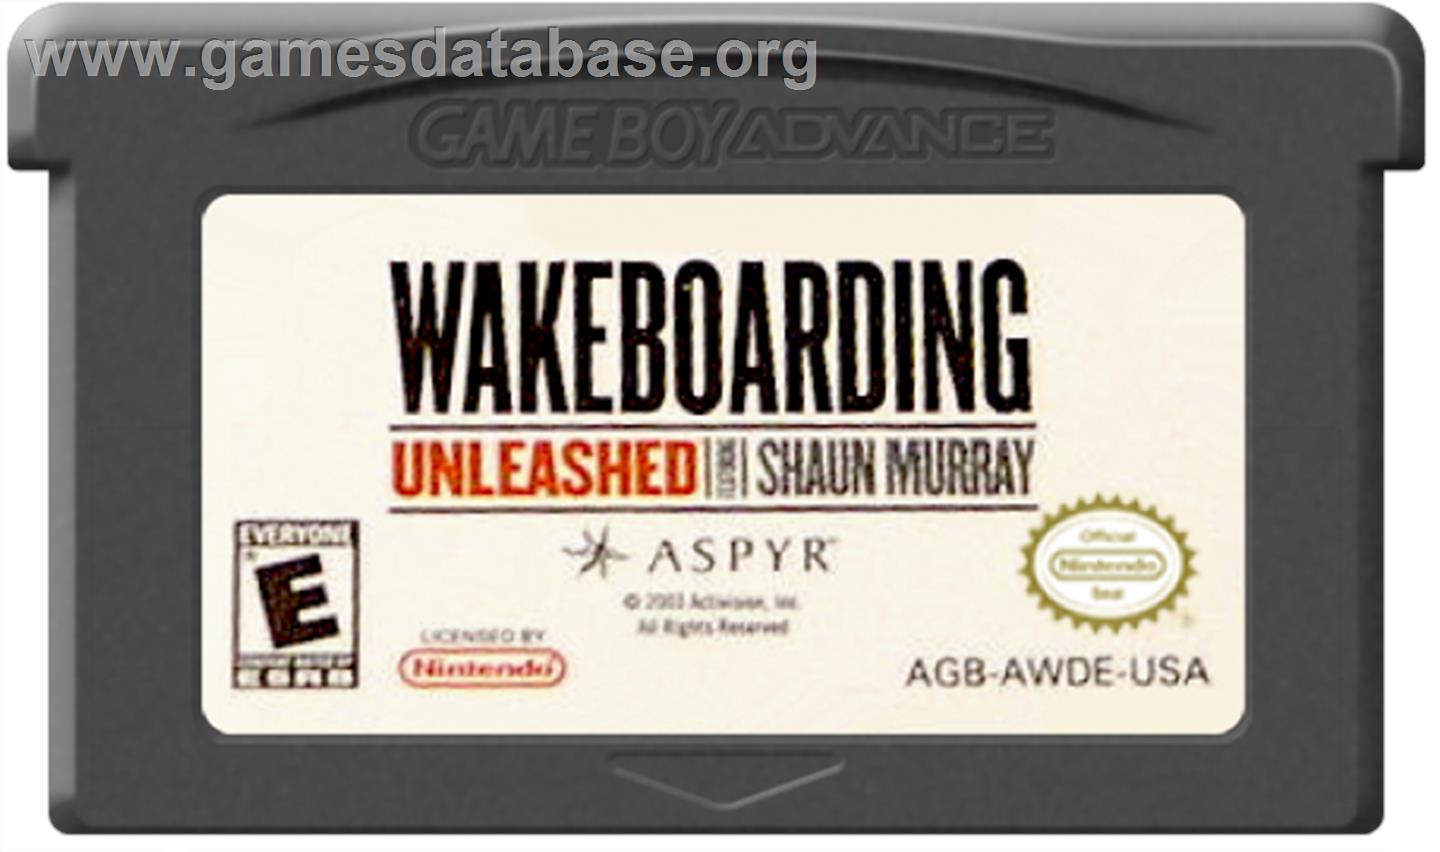 Wakeboarding Unleashed featuring Shaun Murray - Nintendo Game Boy Advance - Artwork - Cartridge